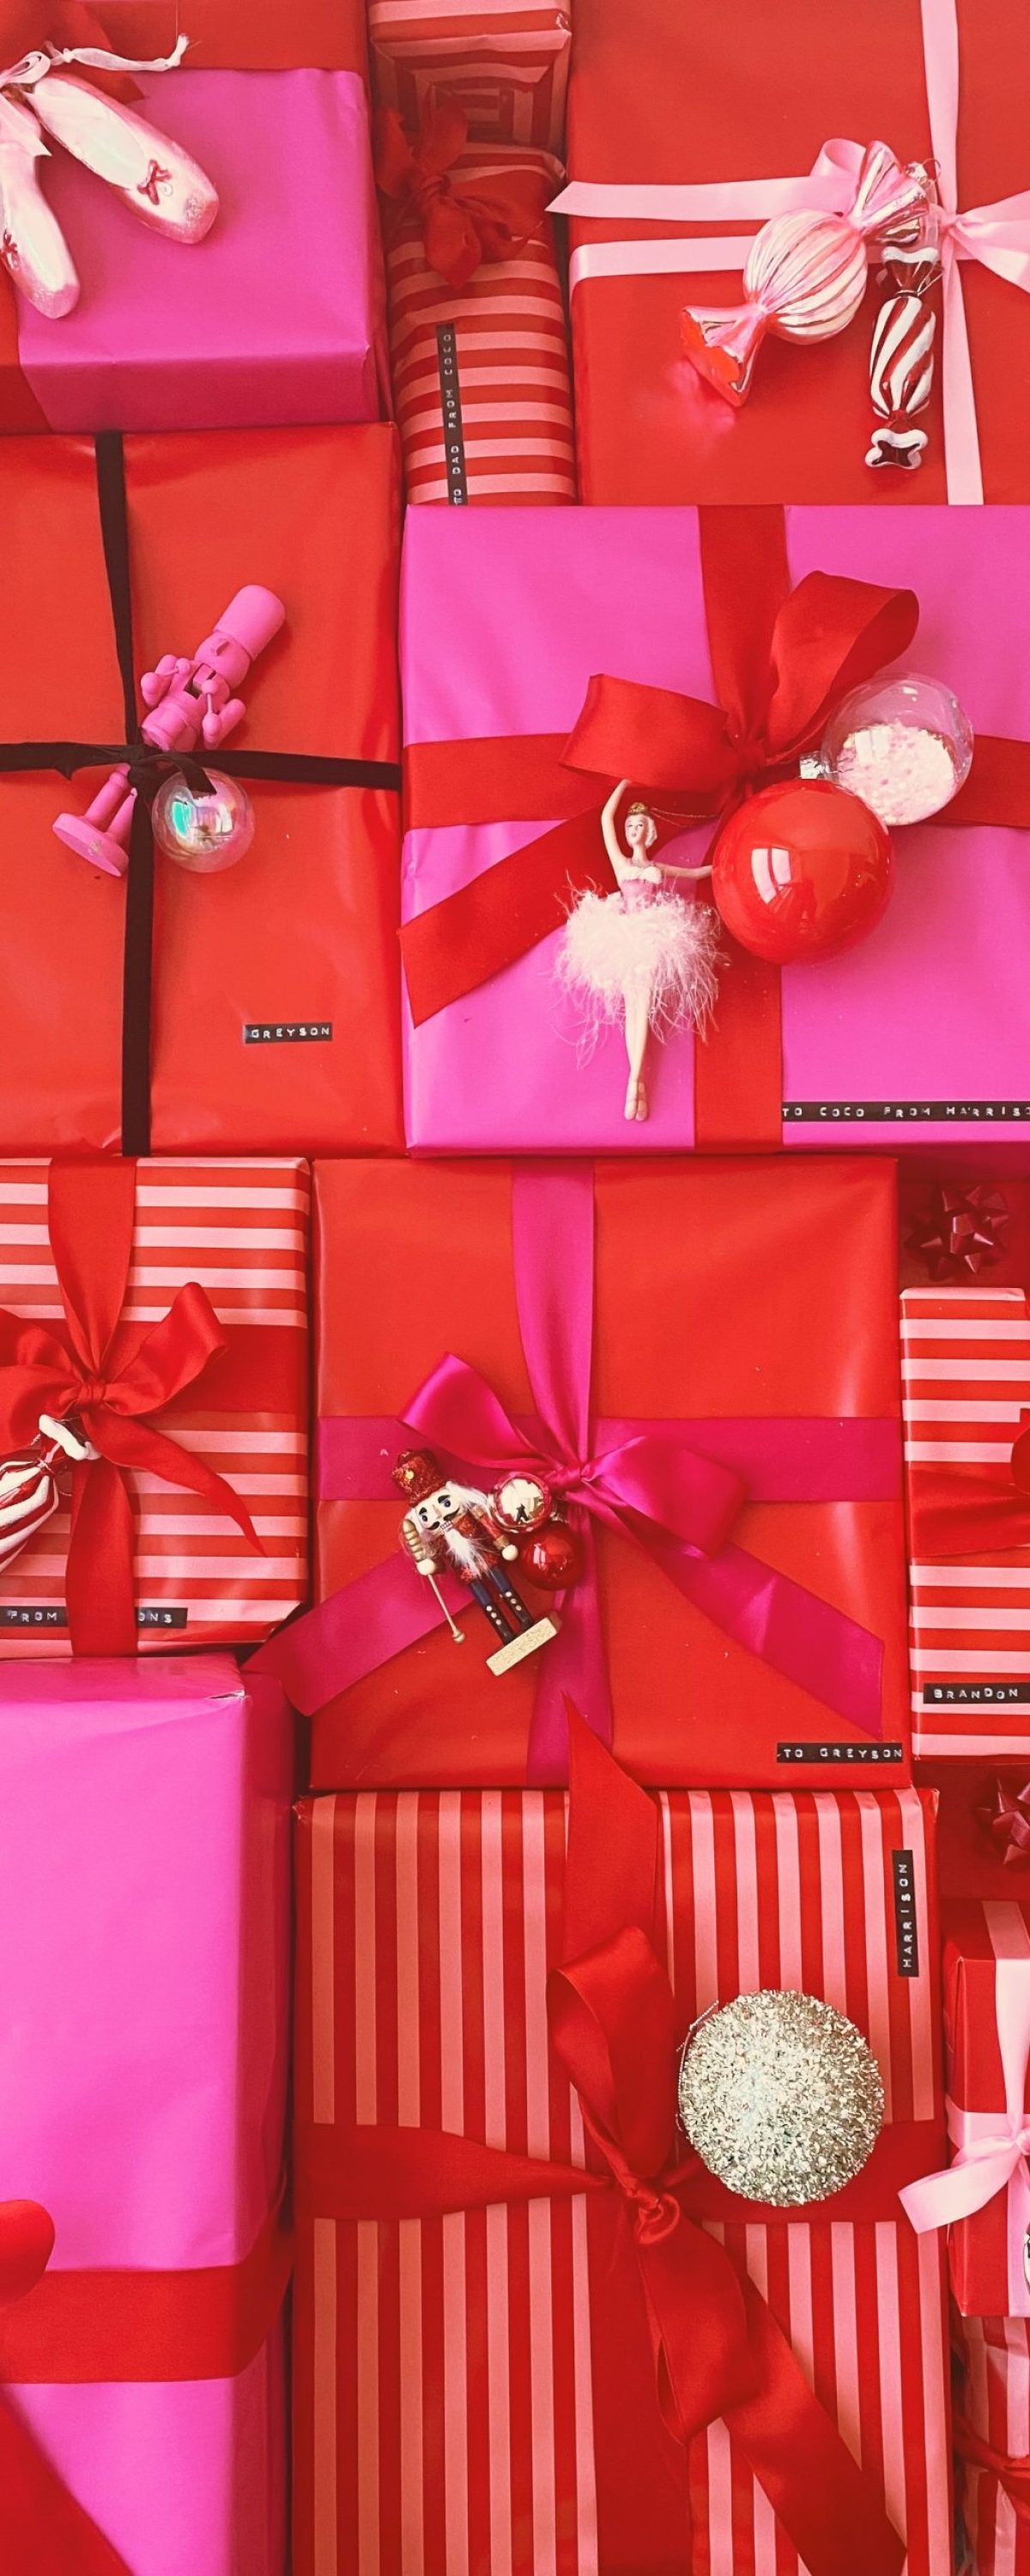 pink-and-red-christmas-presents-2021-12-15-19-50-53-utc